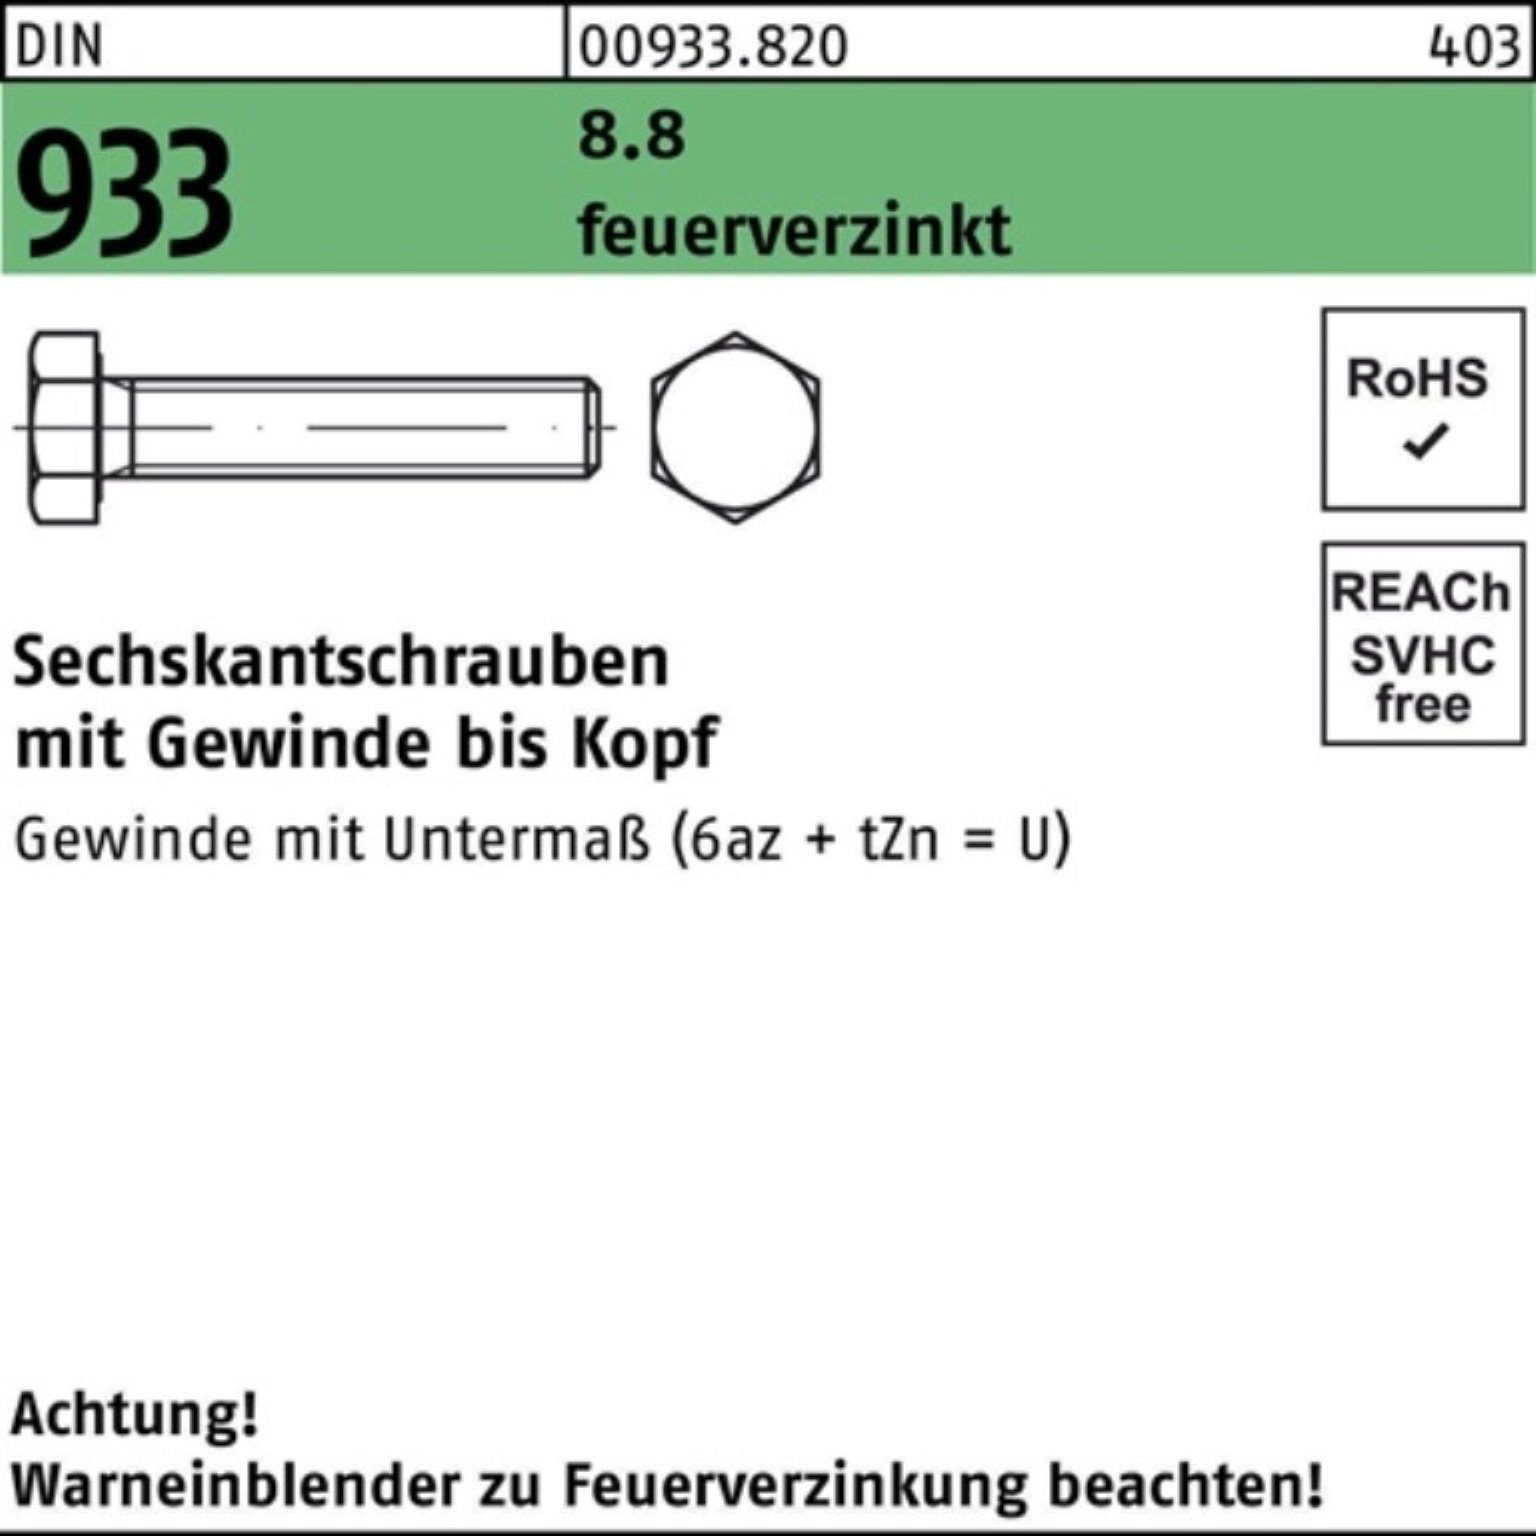 Reyher Sechskantschraube 100er VG St DIN M20x 8.8 Sechskantschraube feuerverz. 933 Pack 25 110